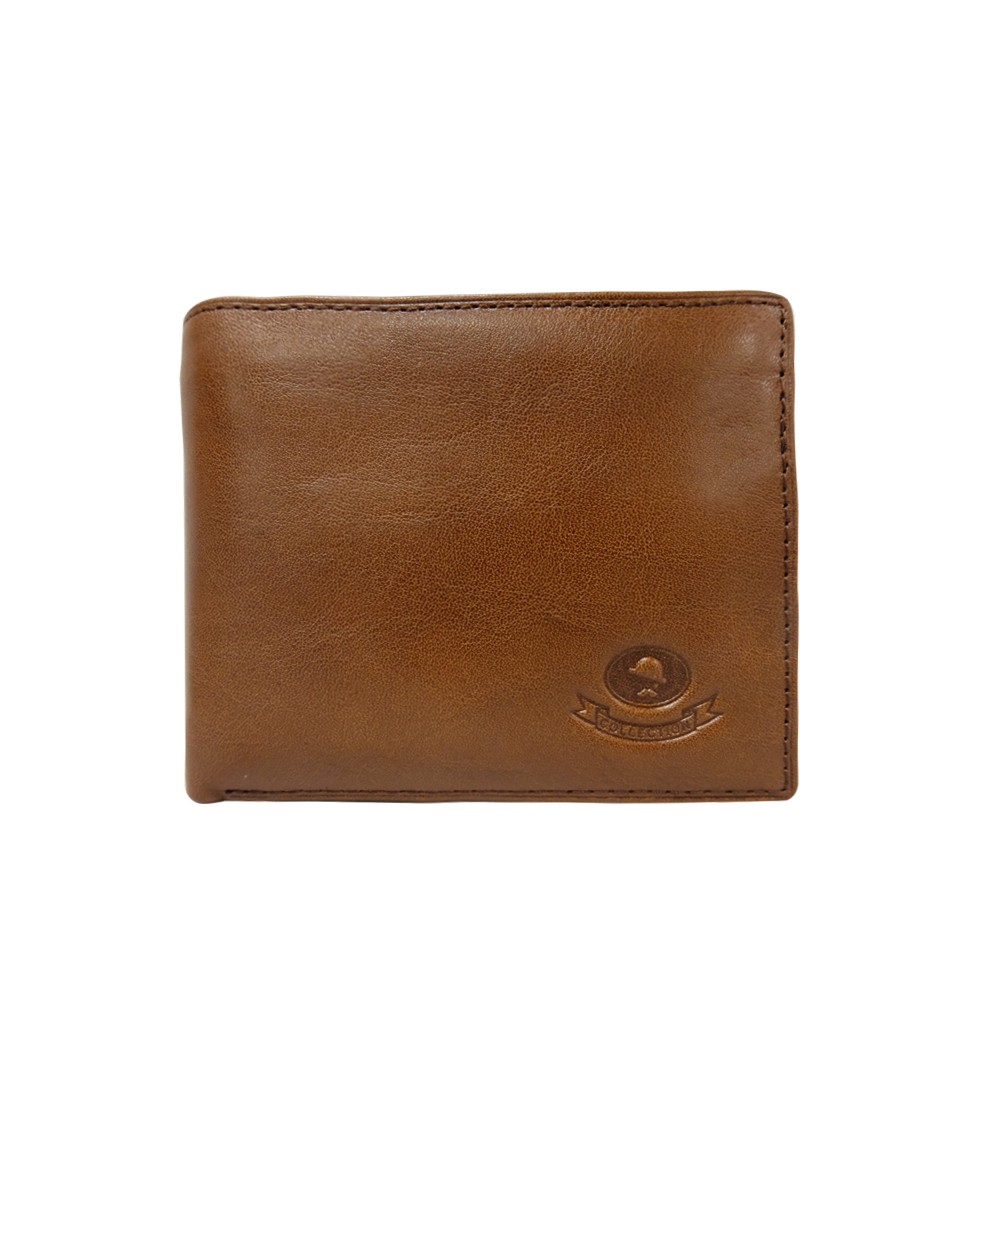 Brandon- McJIM Classic Wallet